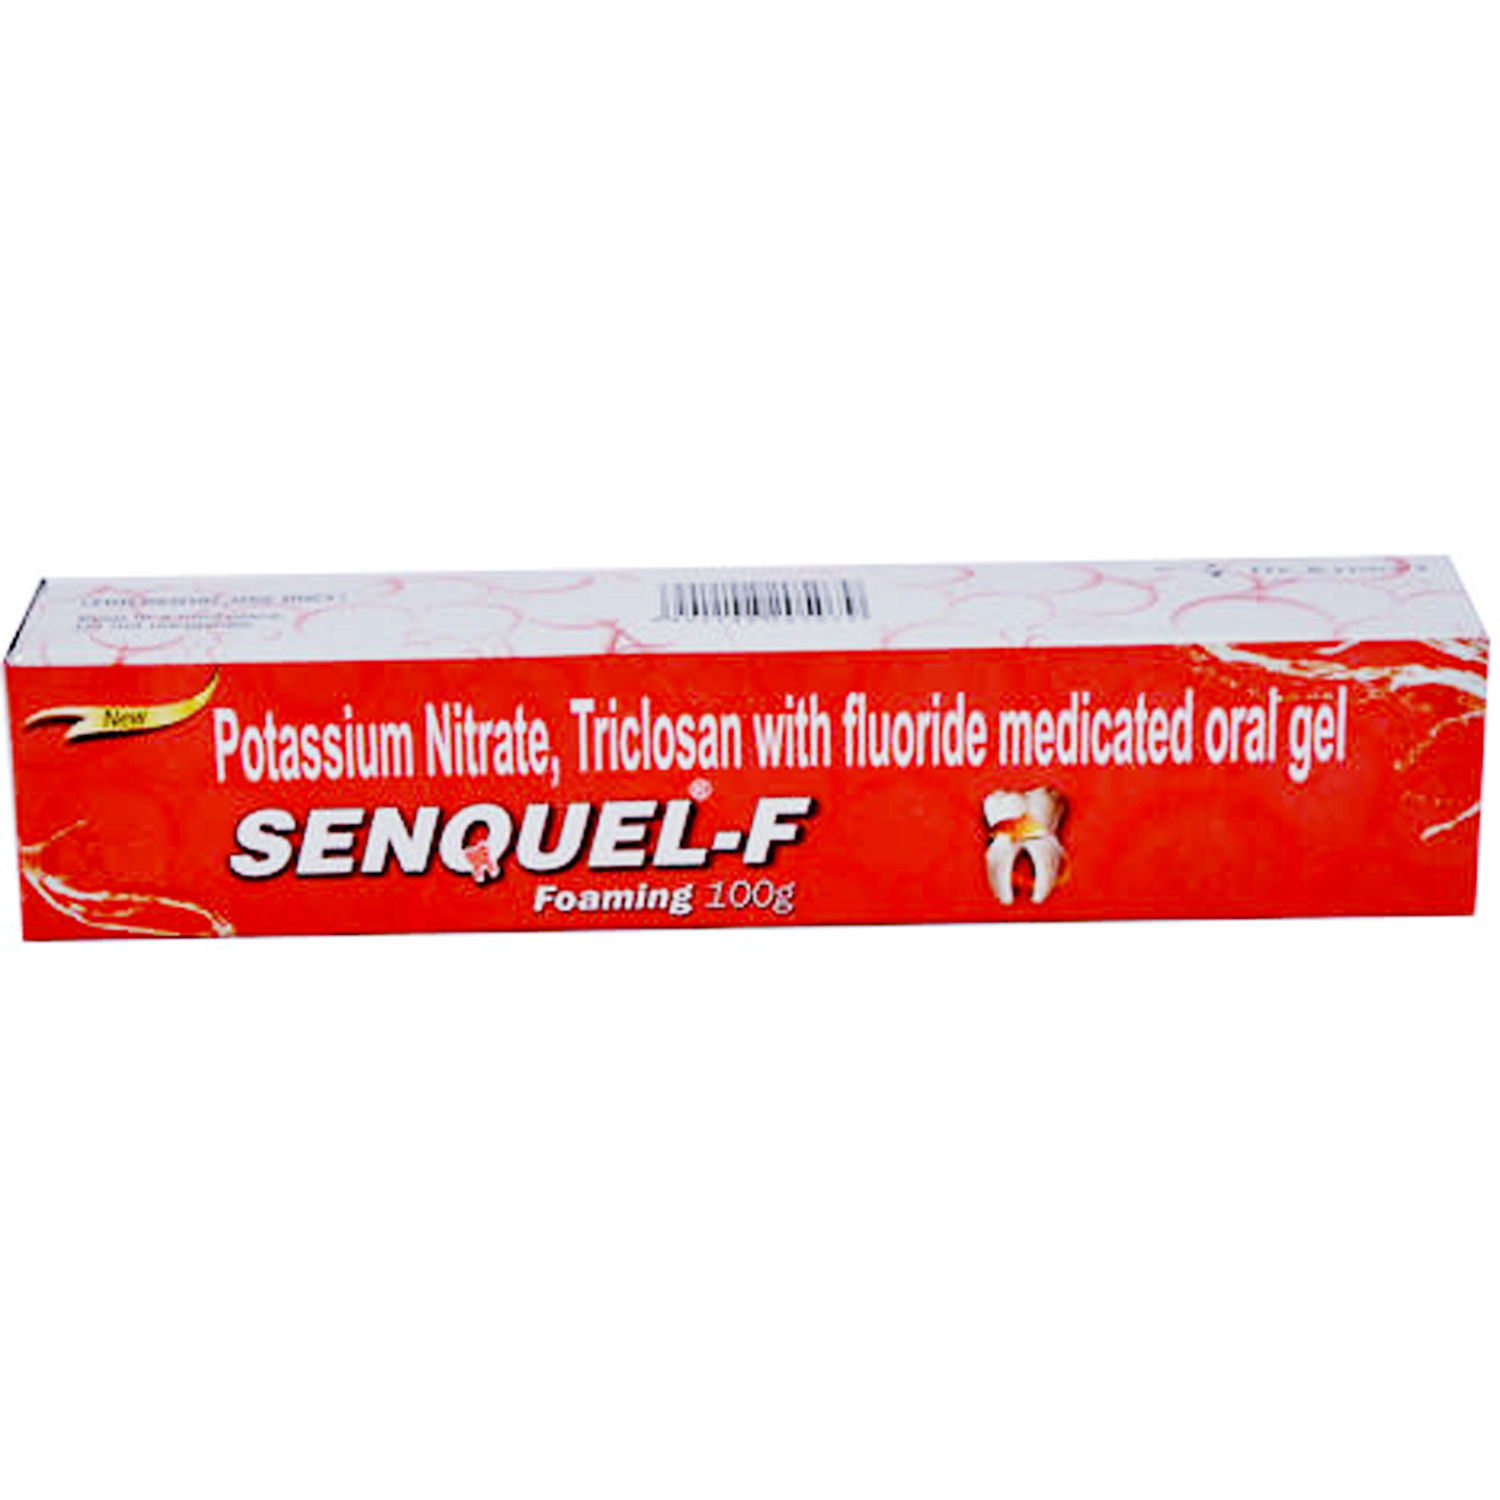 Buy Senquel - F Foaming Medicated Oral Gel, 50 gm Online